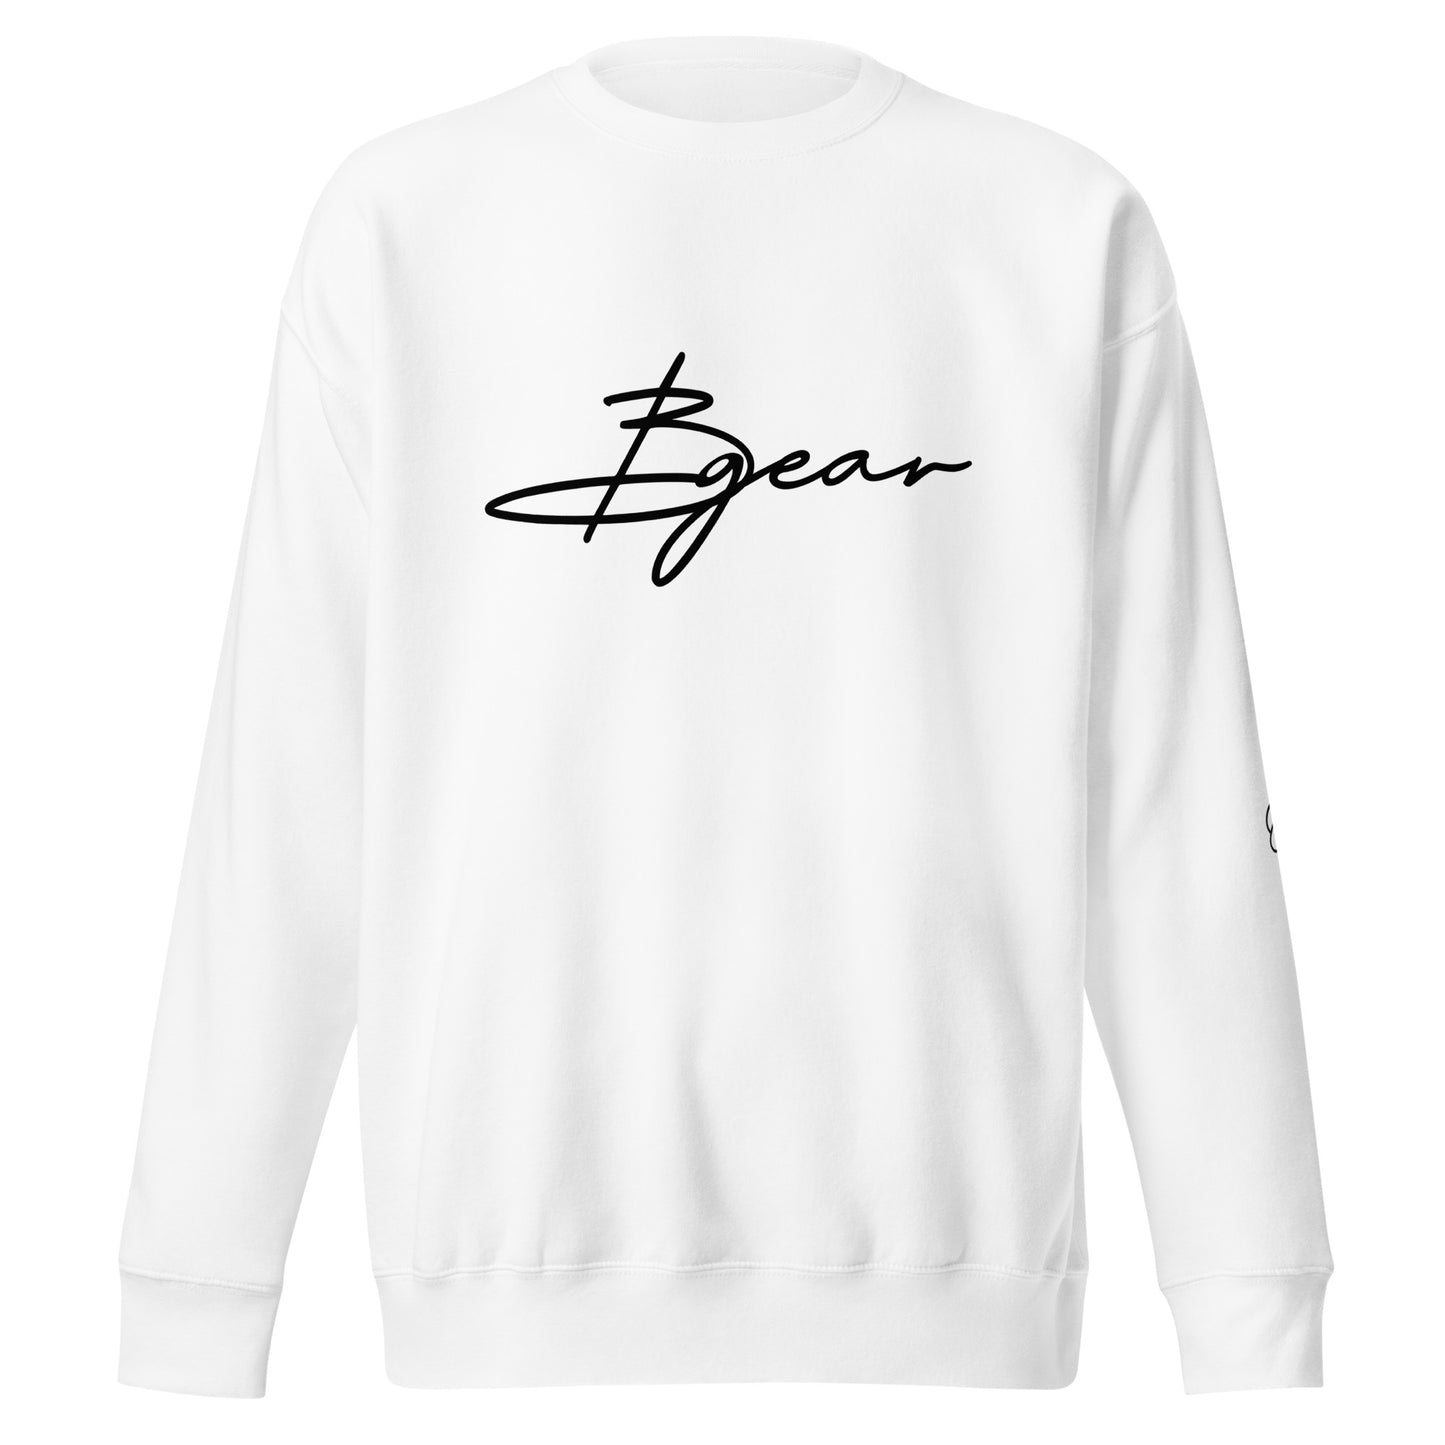 BGear Signature Long Sleeve Crewneck Sweatshirt Unisex